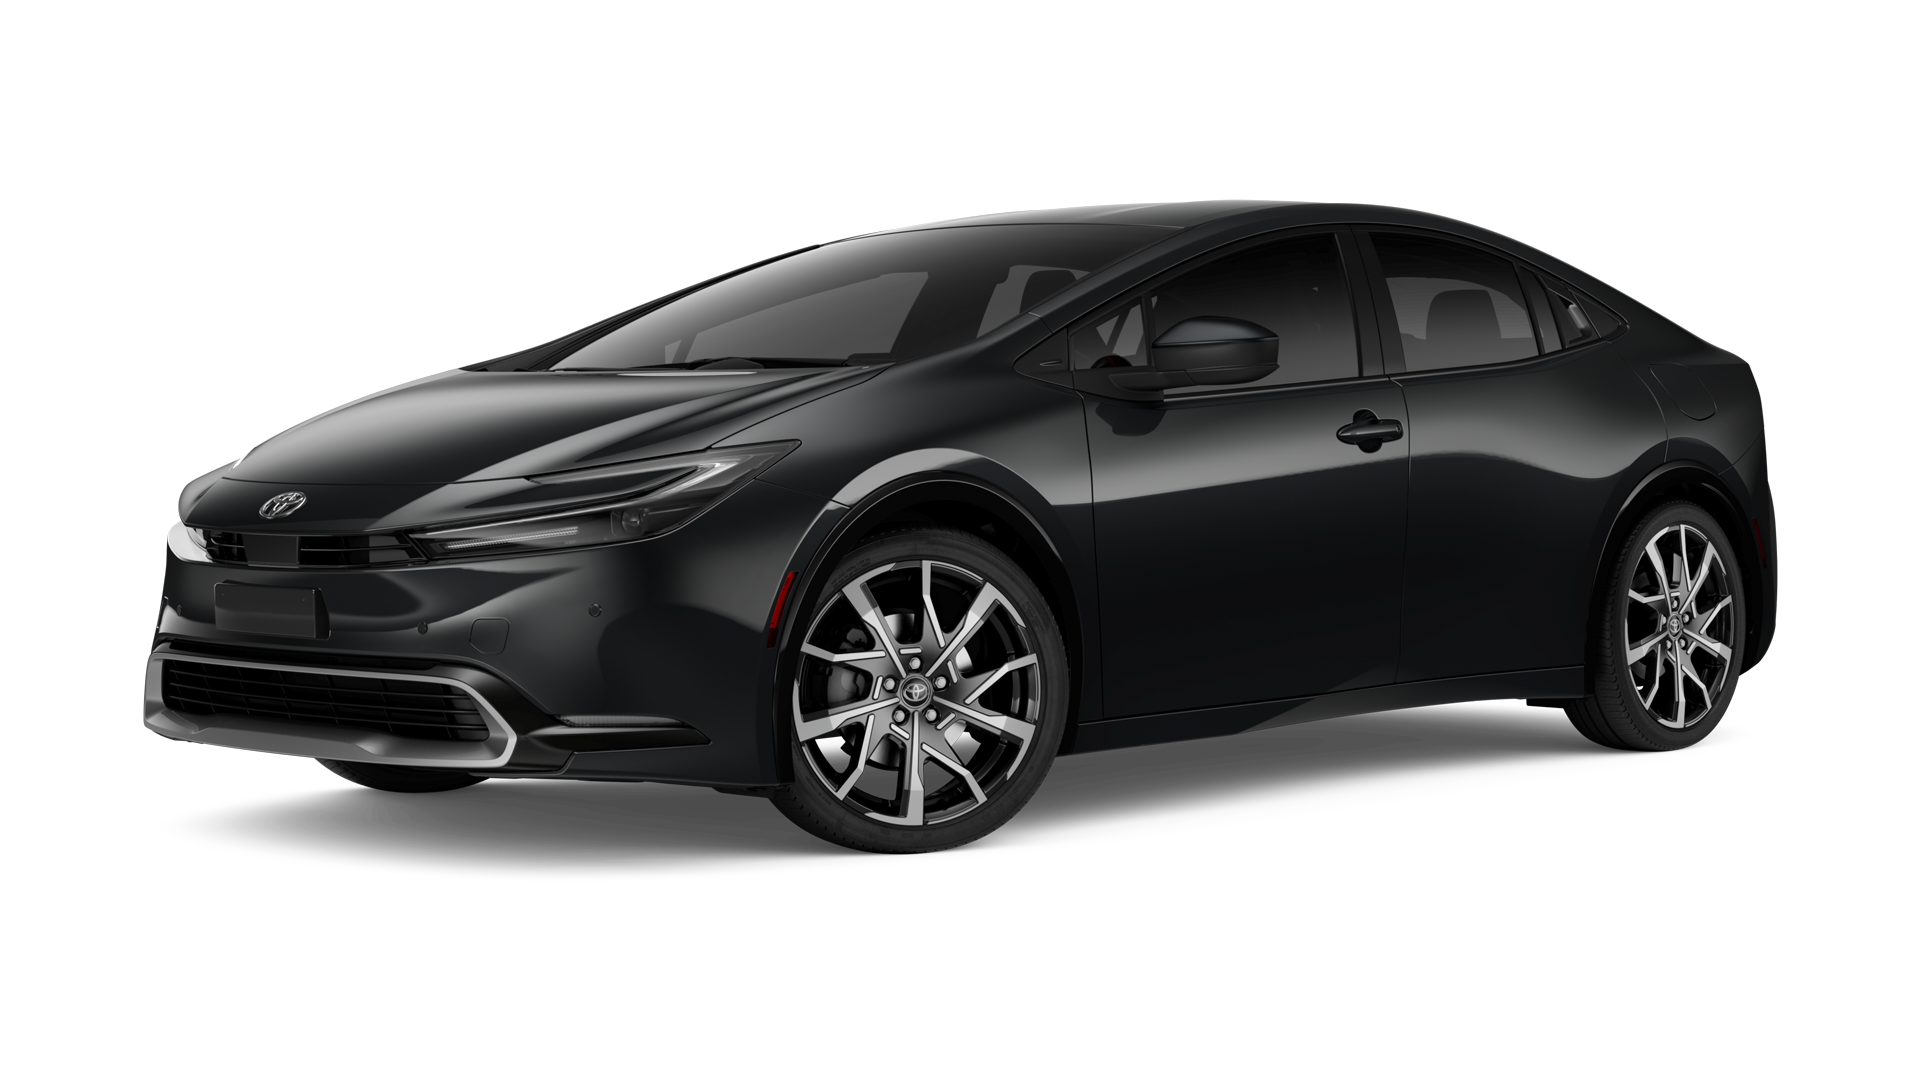 2024 Toyota Prime in Midnight Black Metallic.